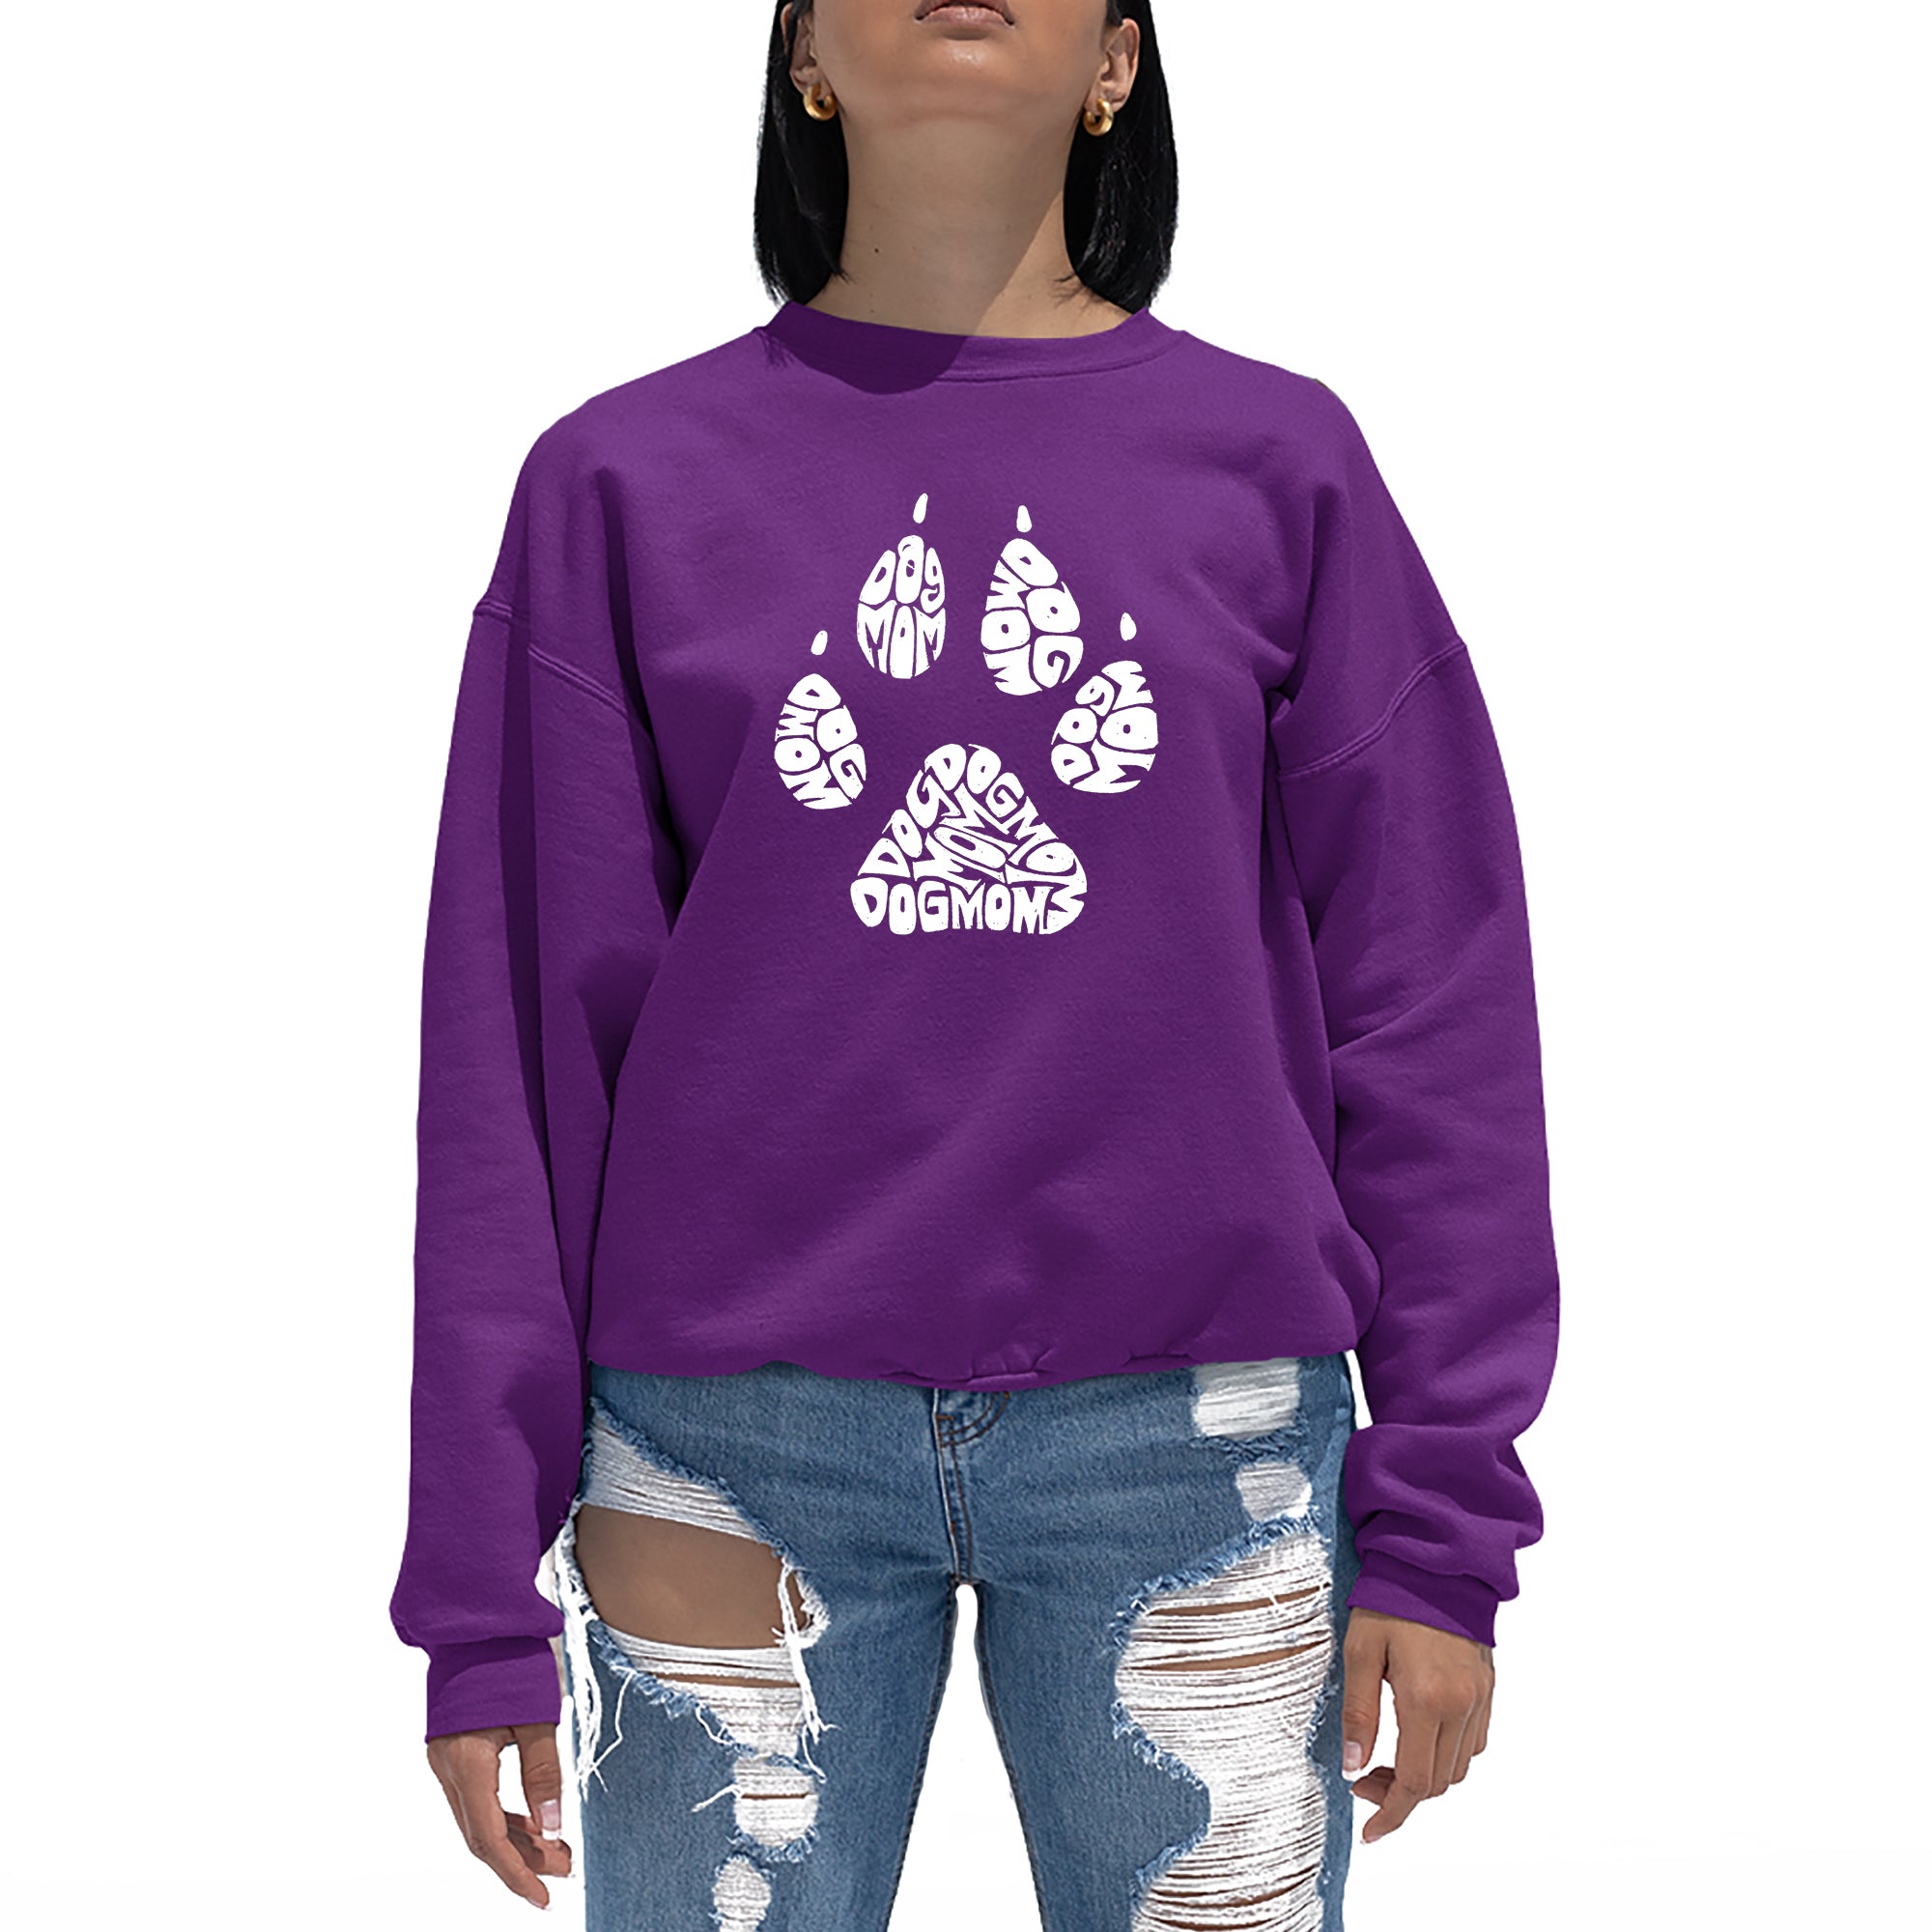 Dog Mom - Women's Word Art Crewneck Sweatshirt - Purple - Small